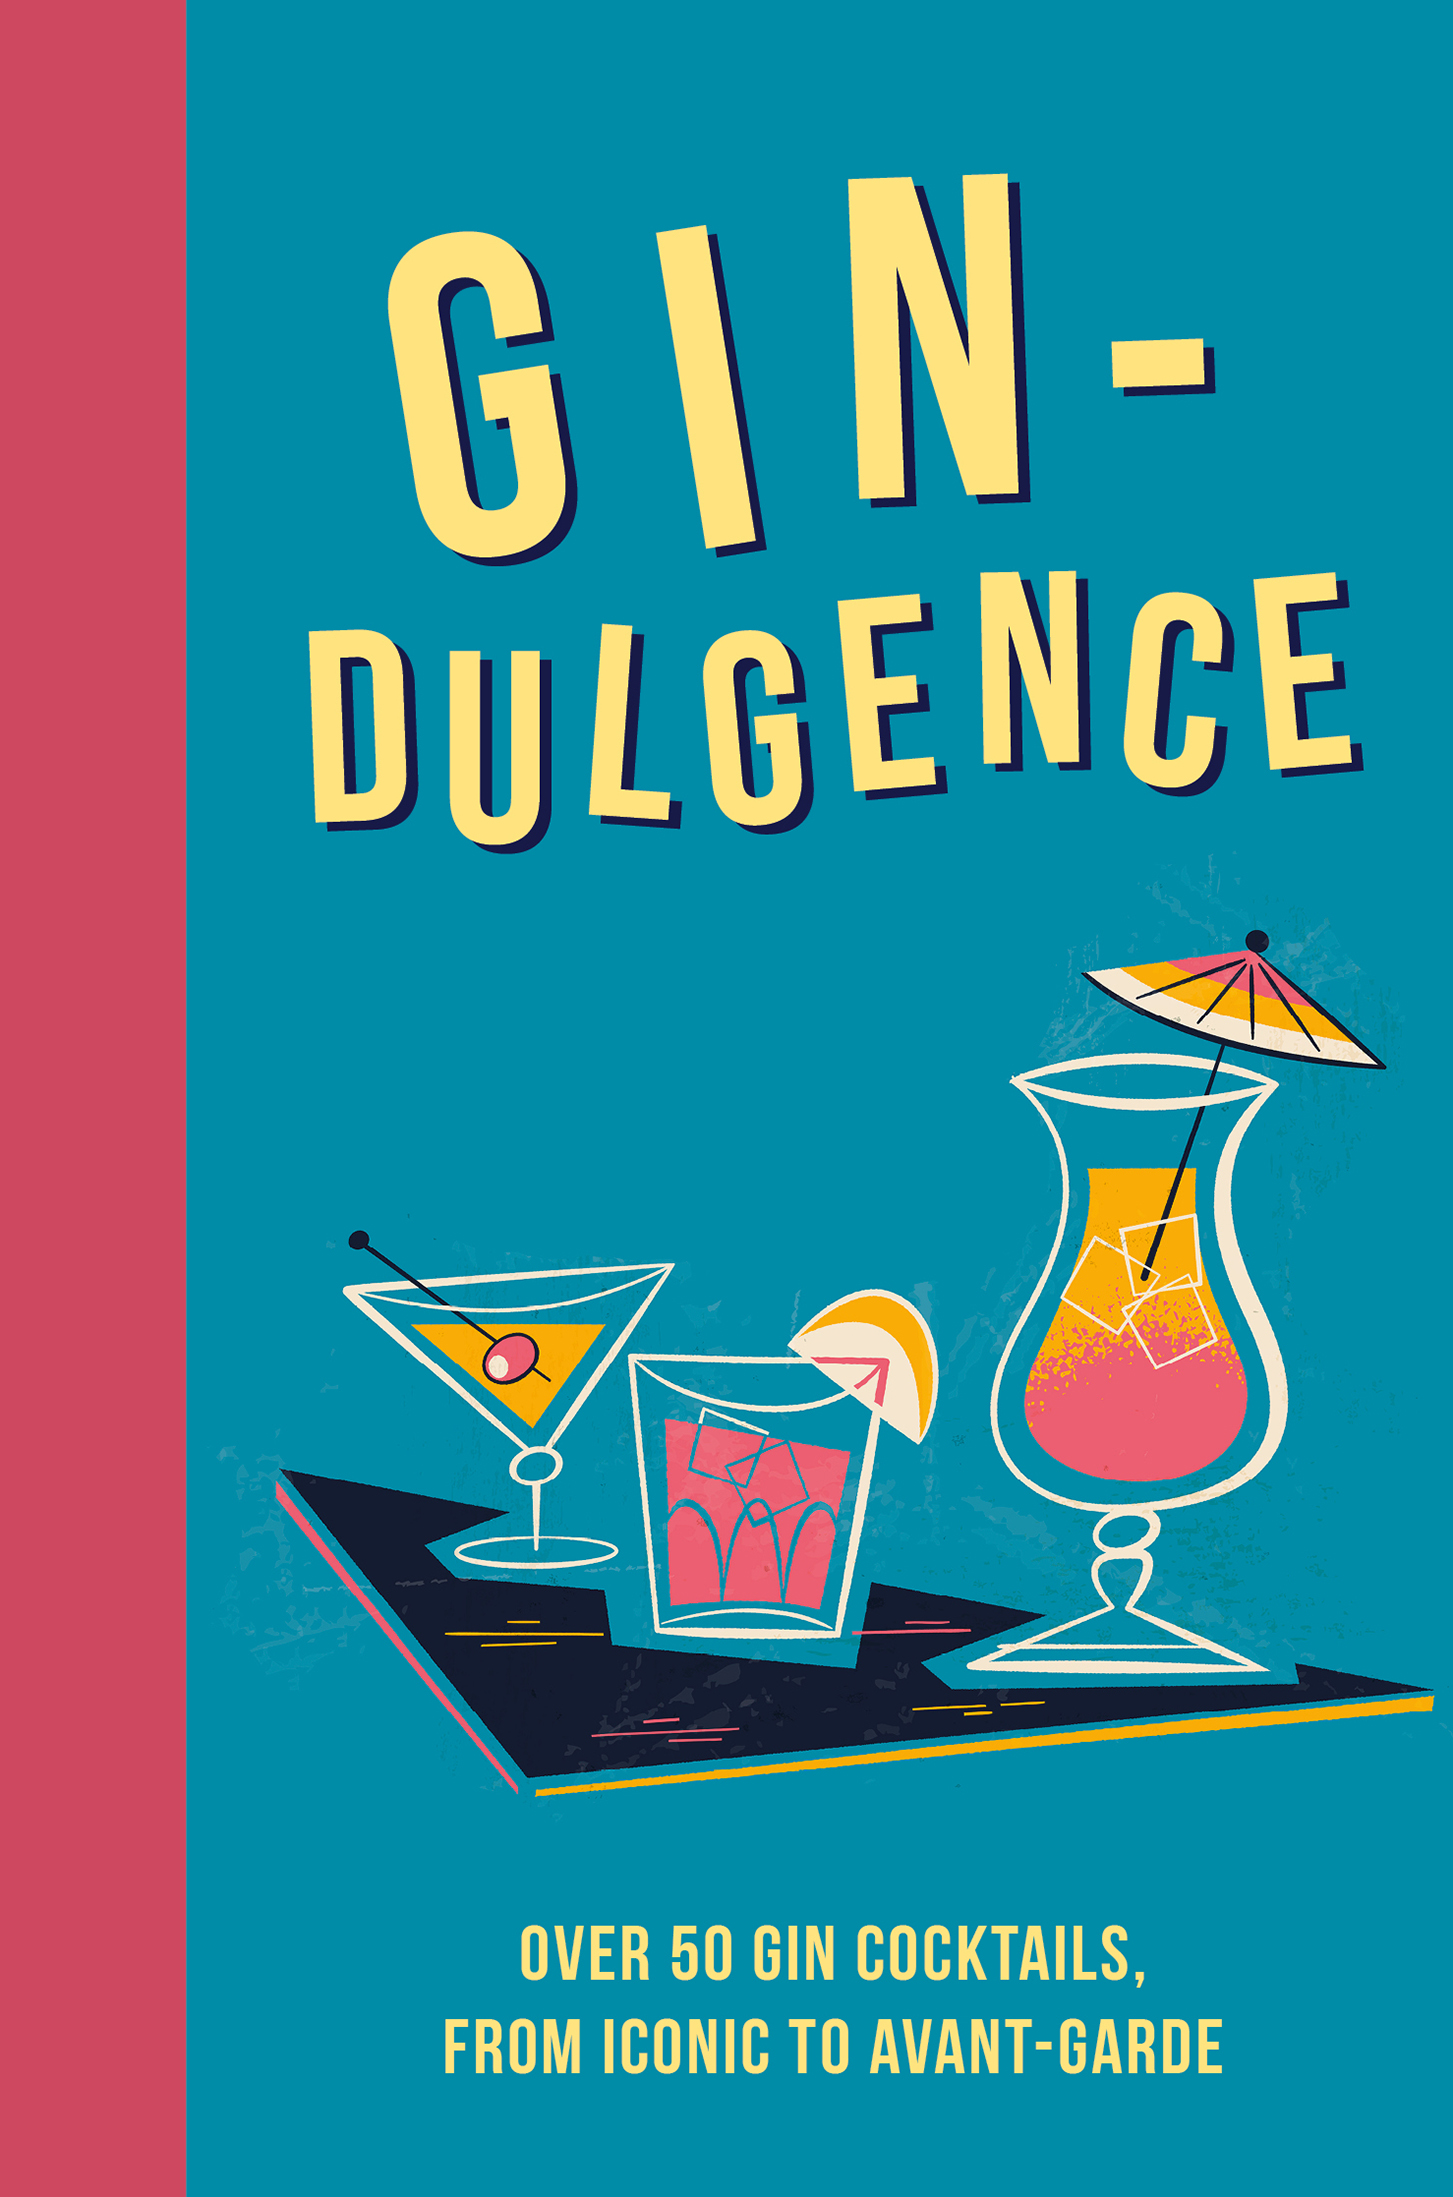 Gin-dulgence